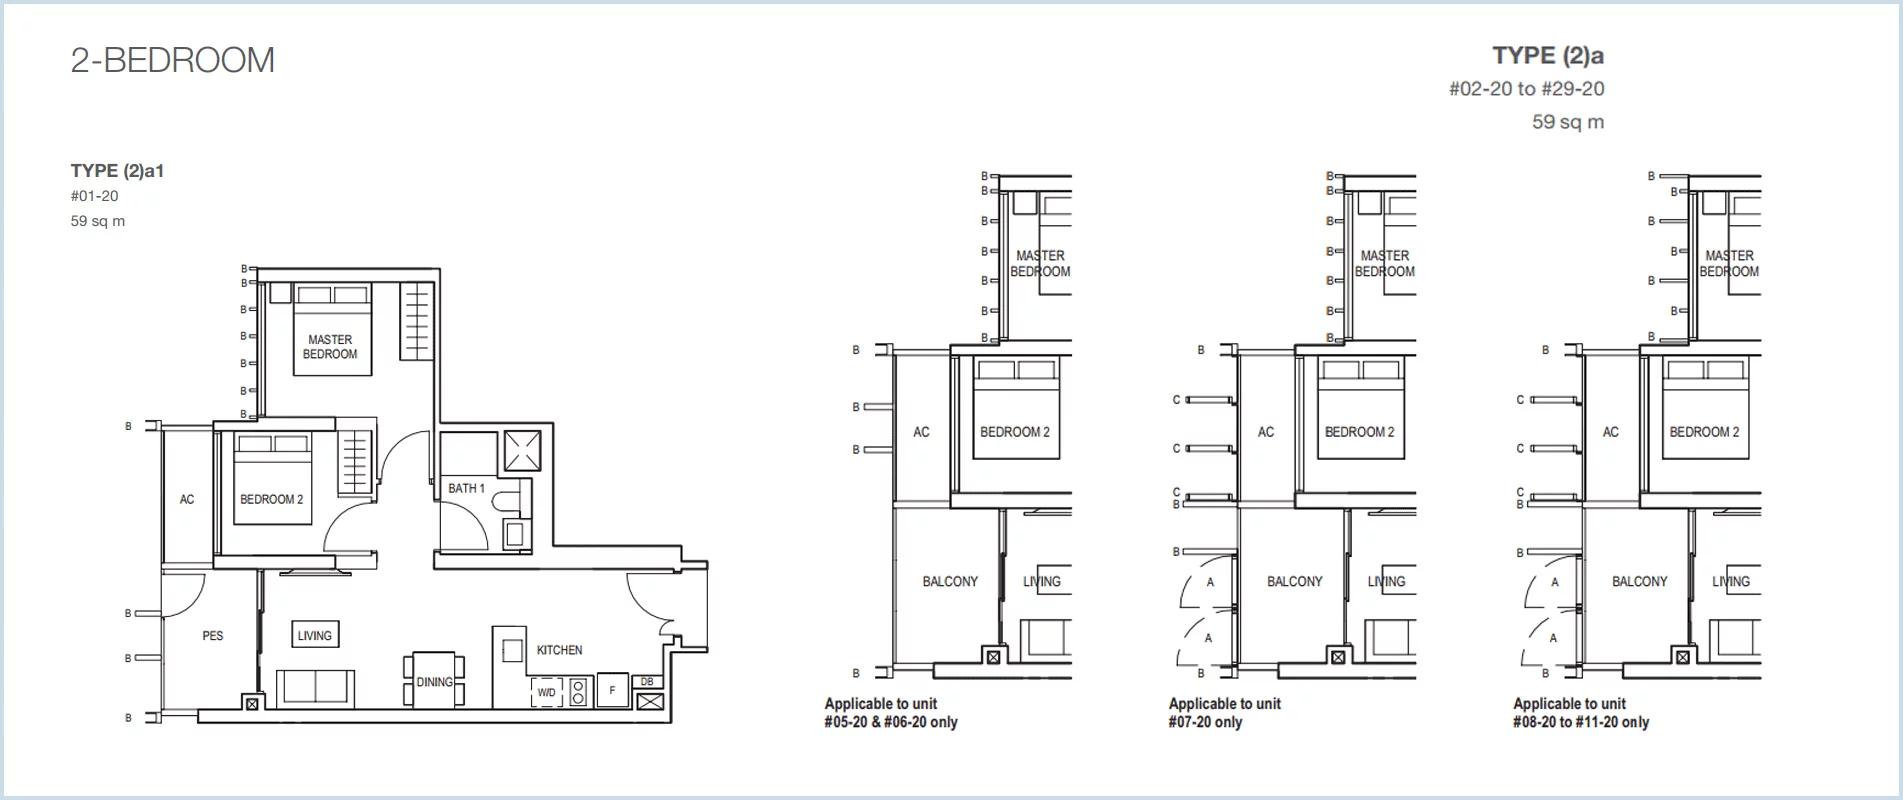 Midwood-hillview-floor plan 2BR Type 2a